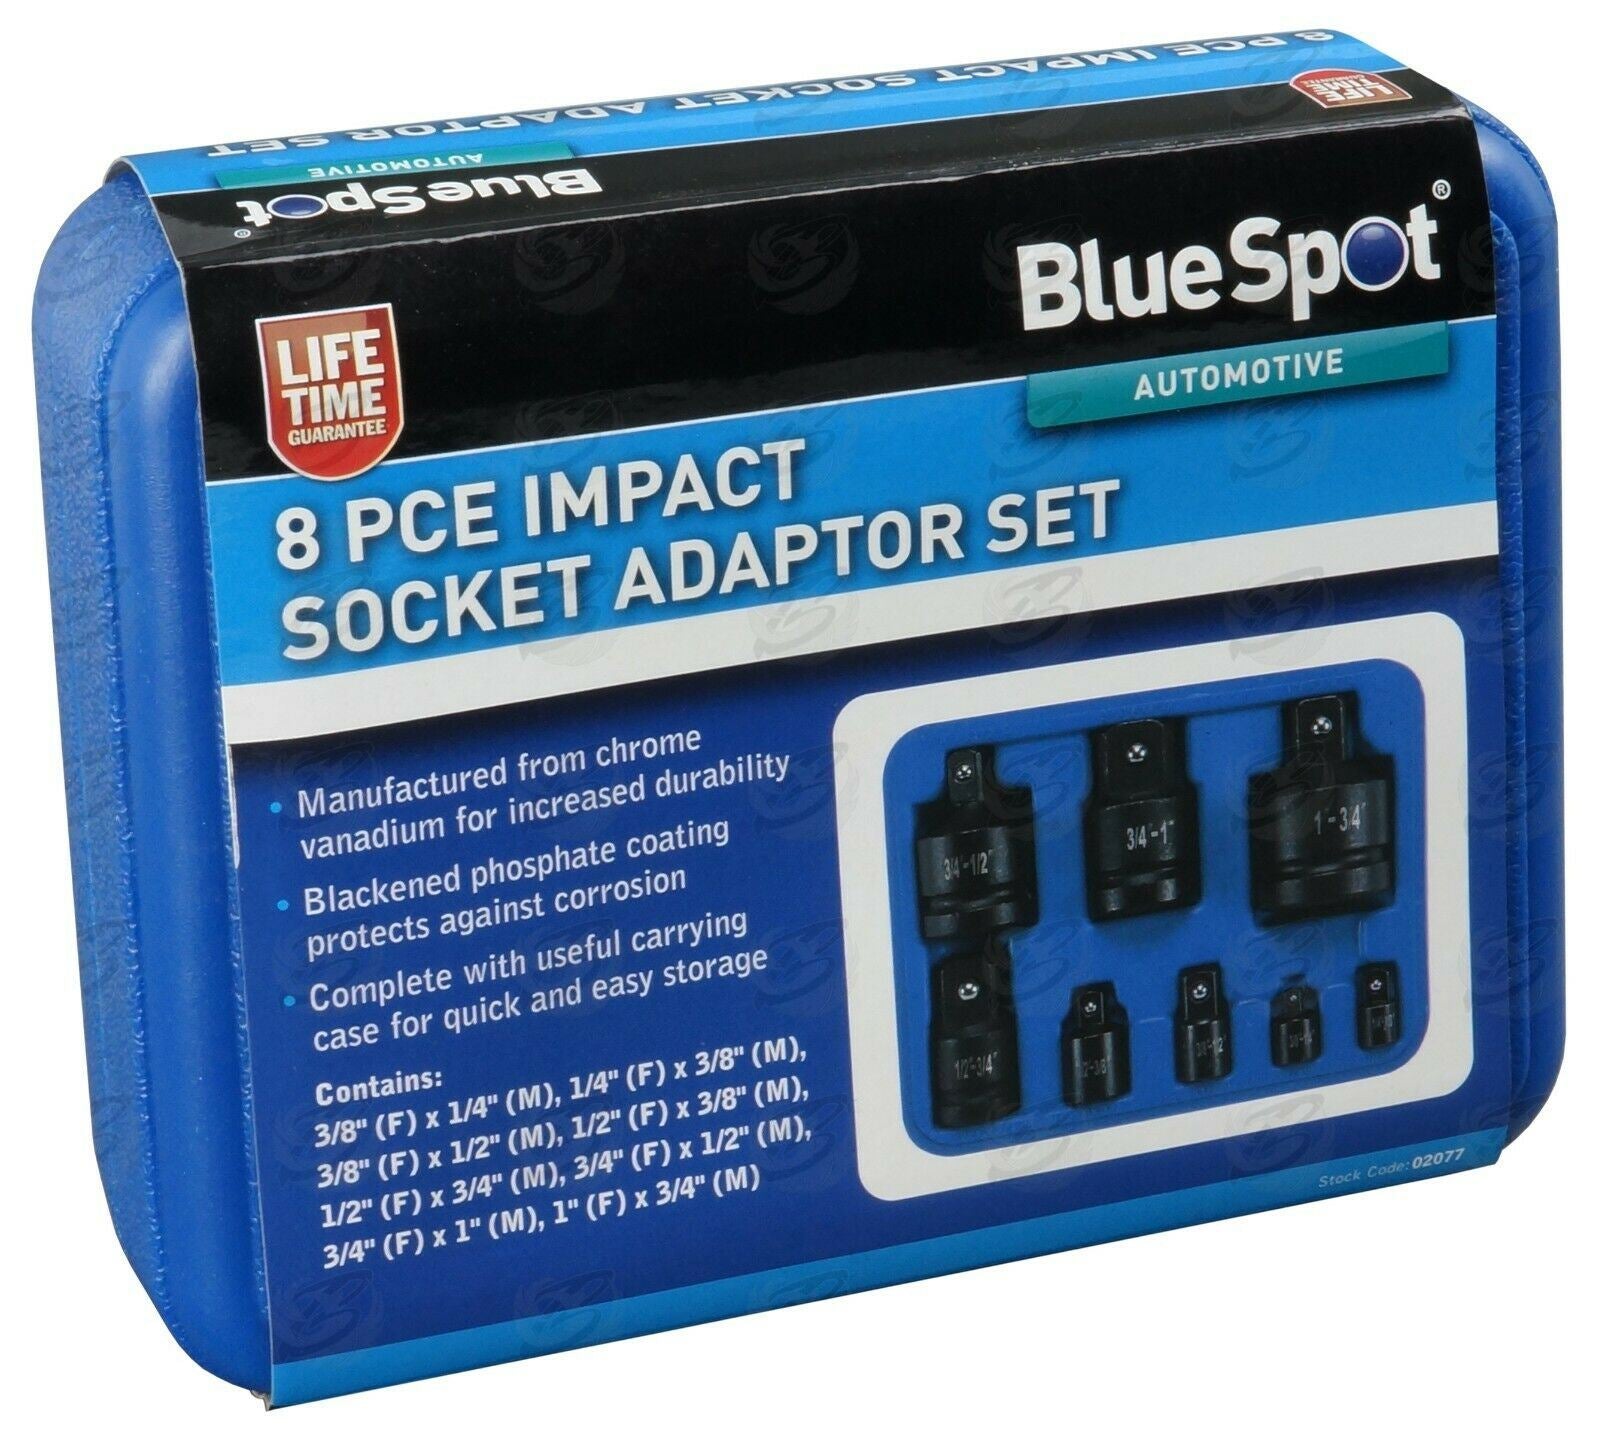 BLUESPOT 8PCS IMPACT SOCKET ADAPTER SET ( 1/4" - 1" )